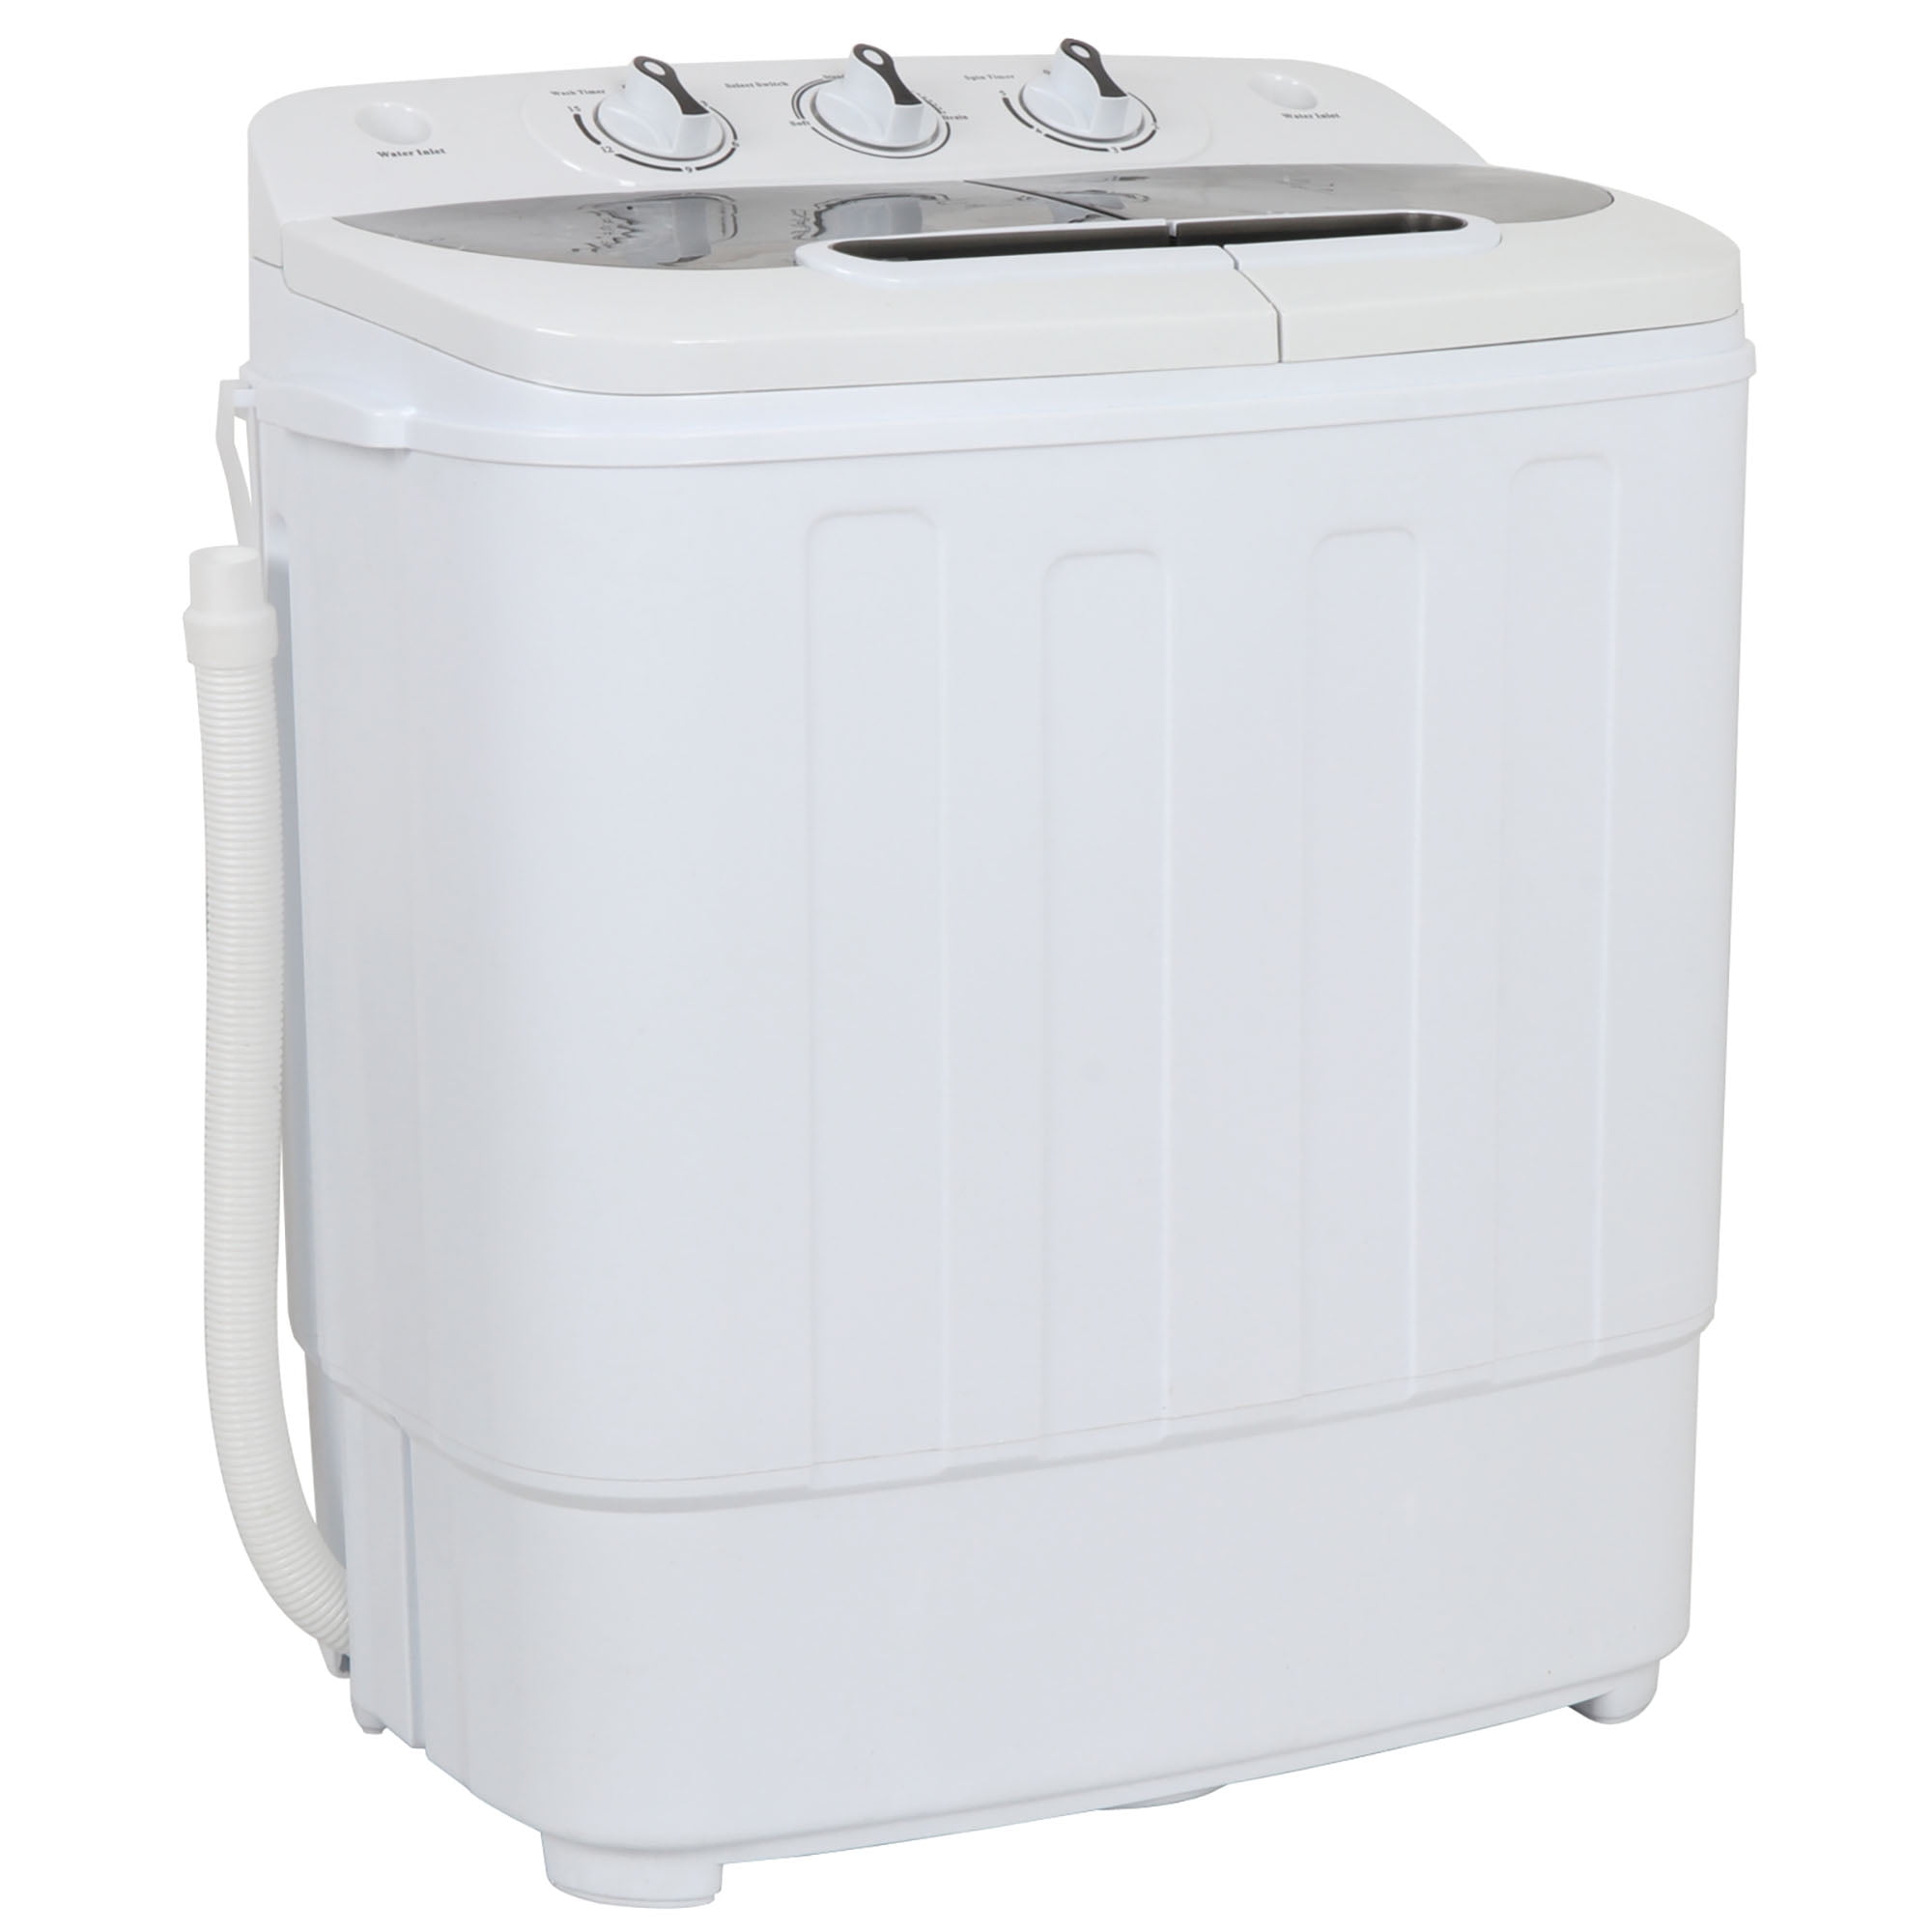 Mini Compact Twin Tub Washing Machine Washer 13lbs Spin Spinner